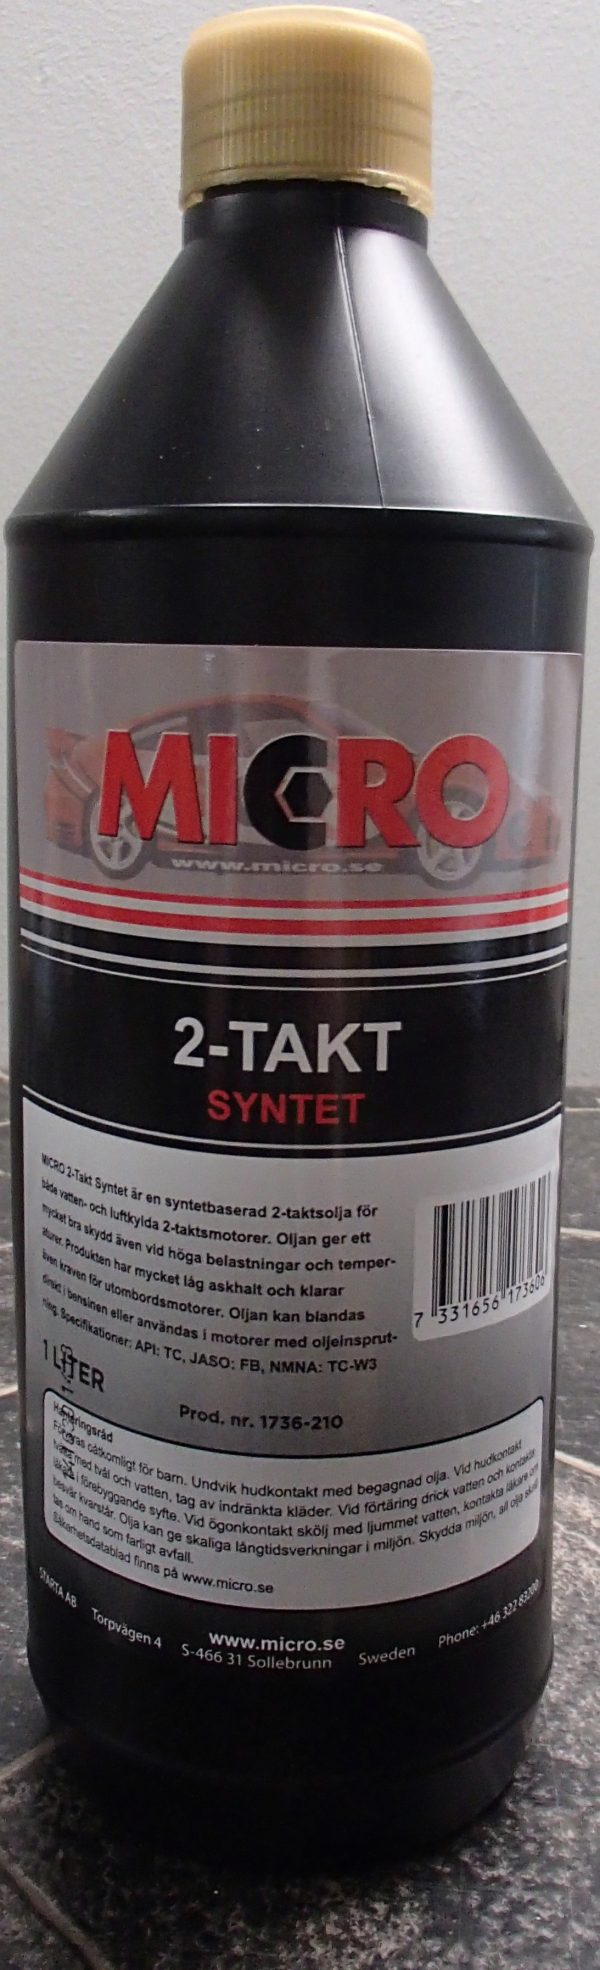 lmr Micro 2-Takt Syntet (1L)